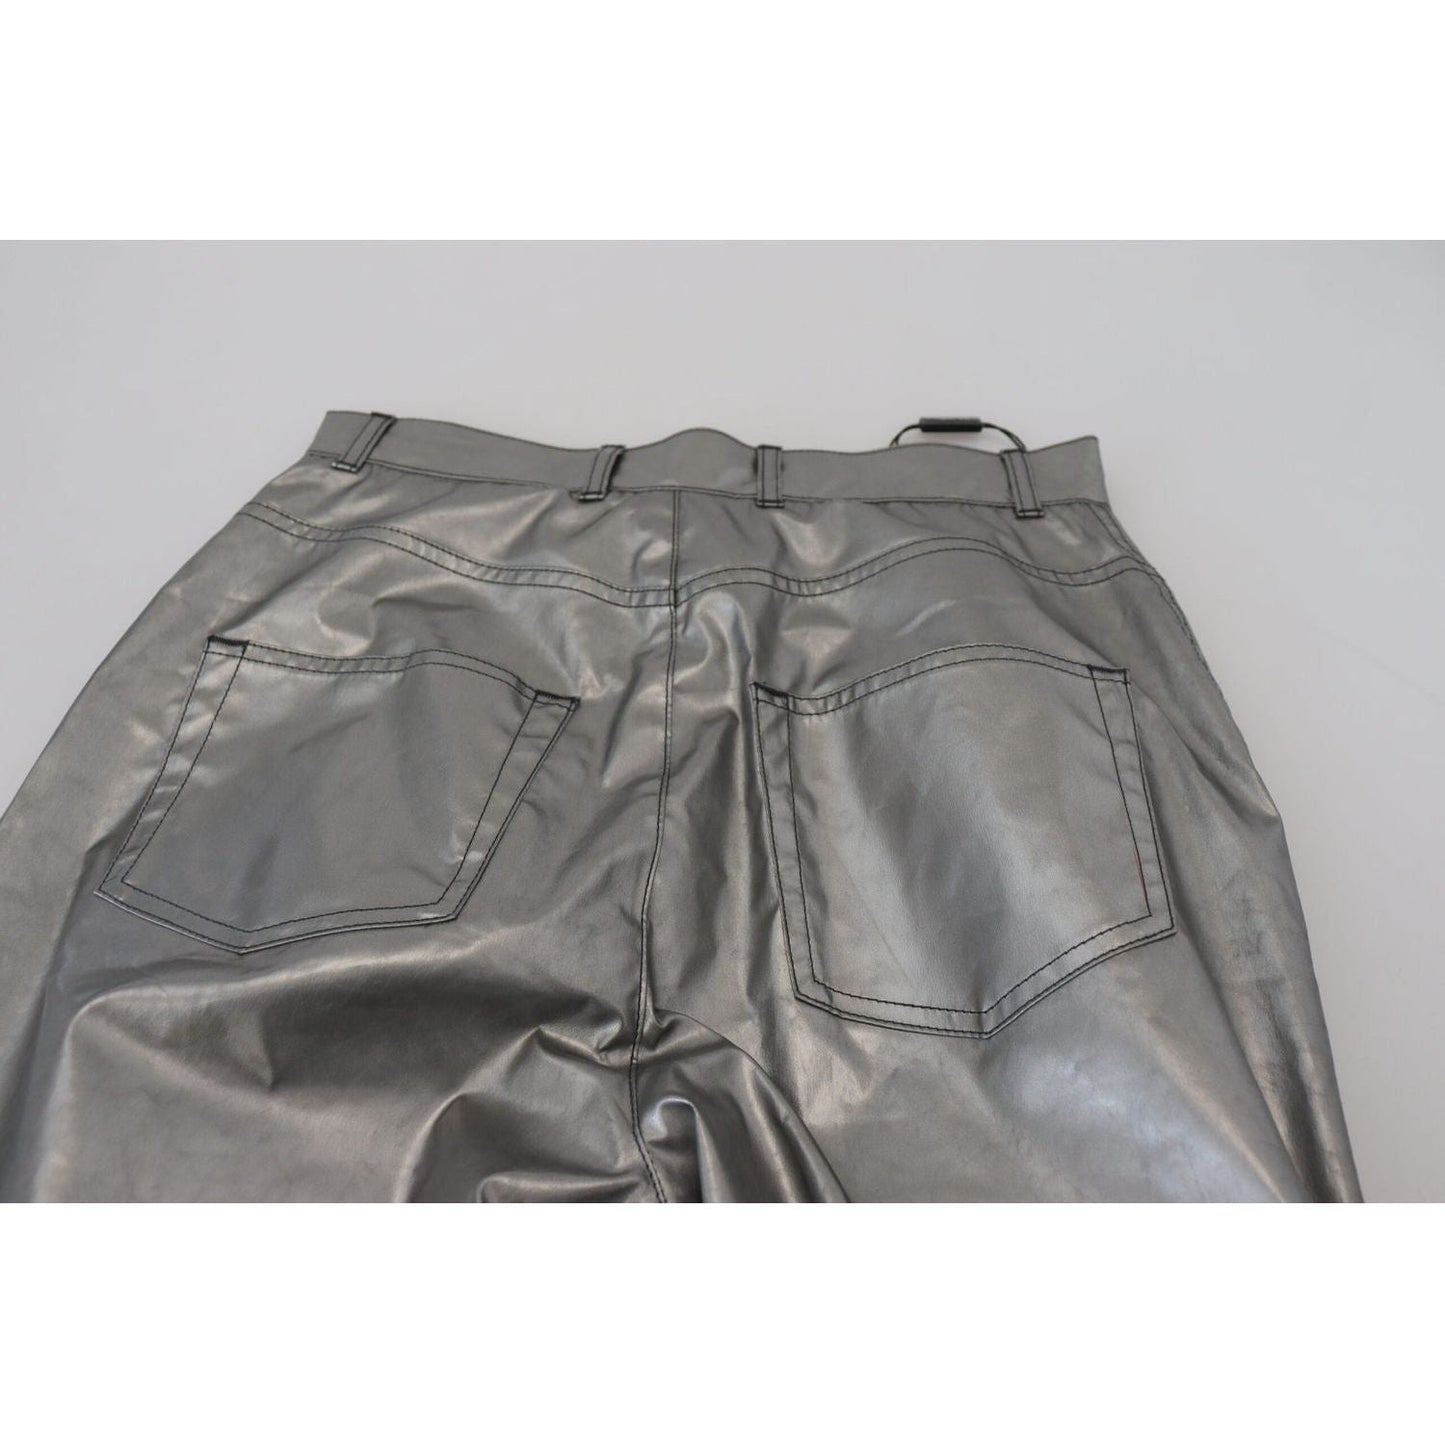 Dolce & Gabbana Elegant High Waist Skinny Pants in Silver metallic-silver-high-waist-skinny-pants